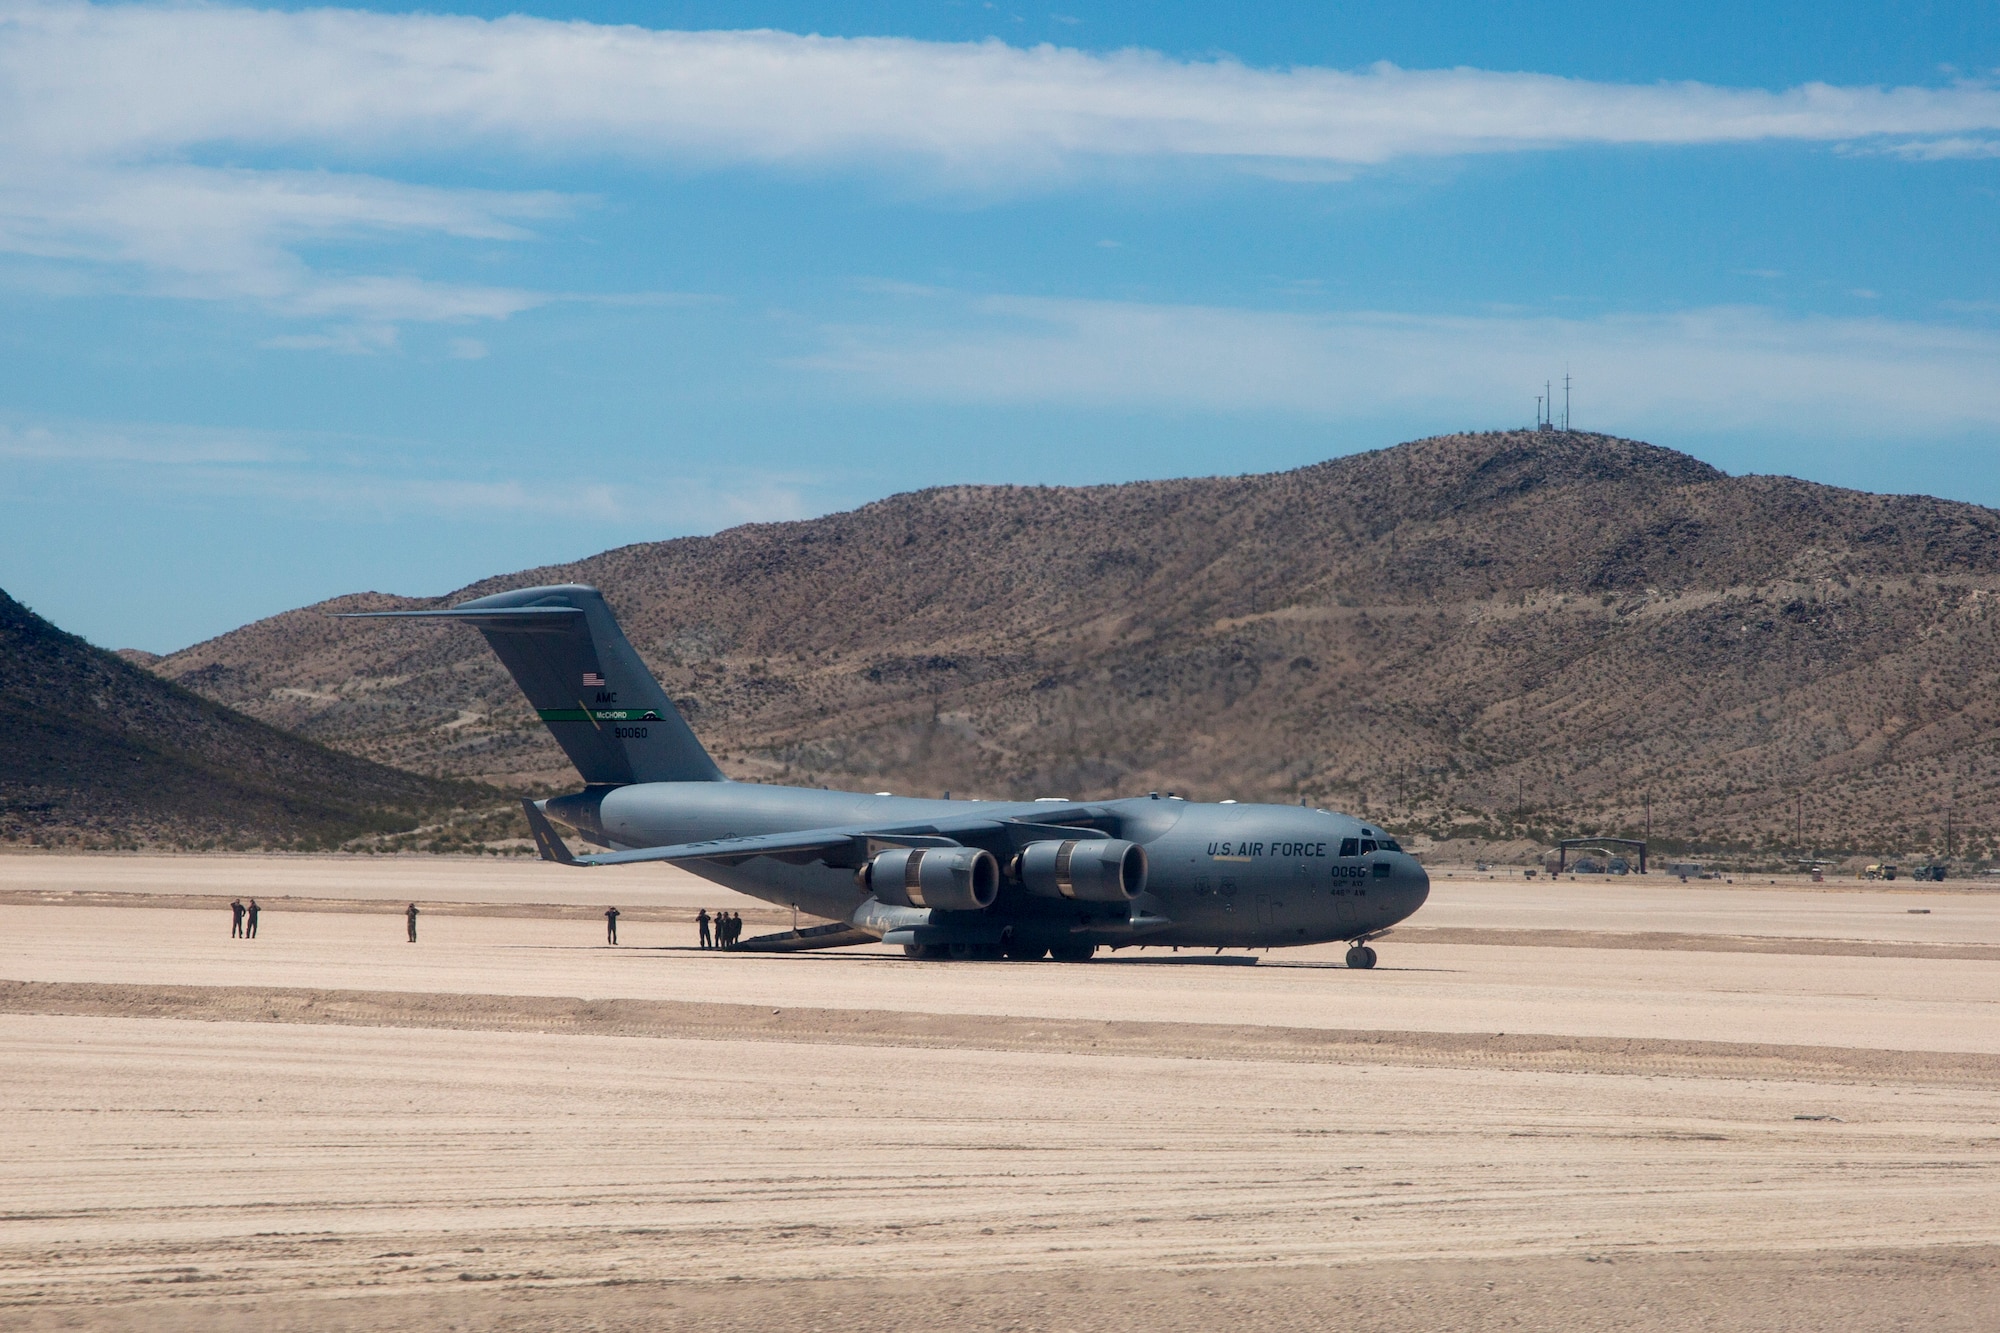 C-17 sitting on dirt runway